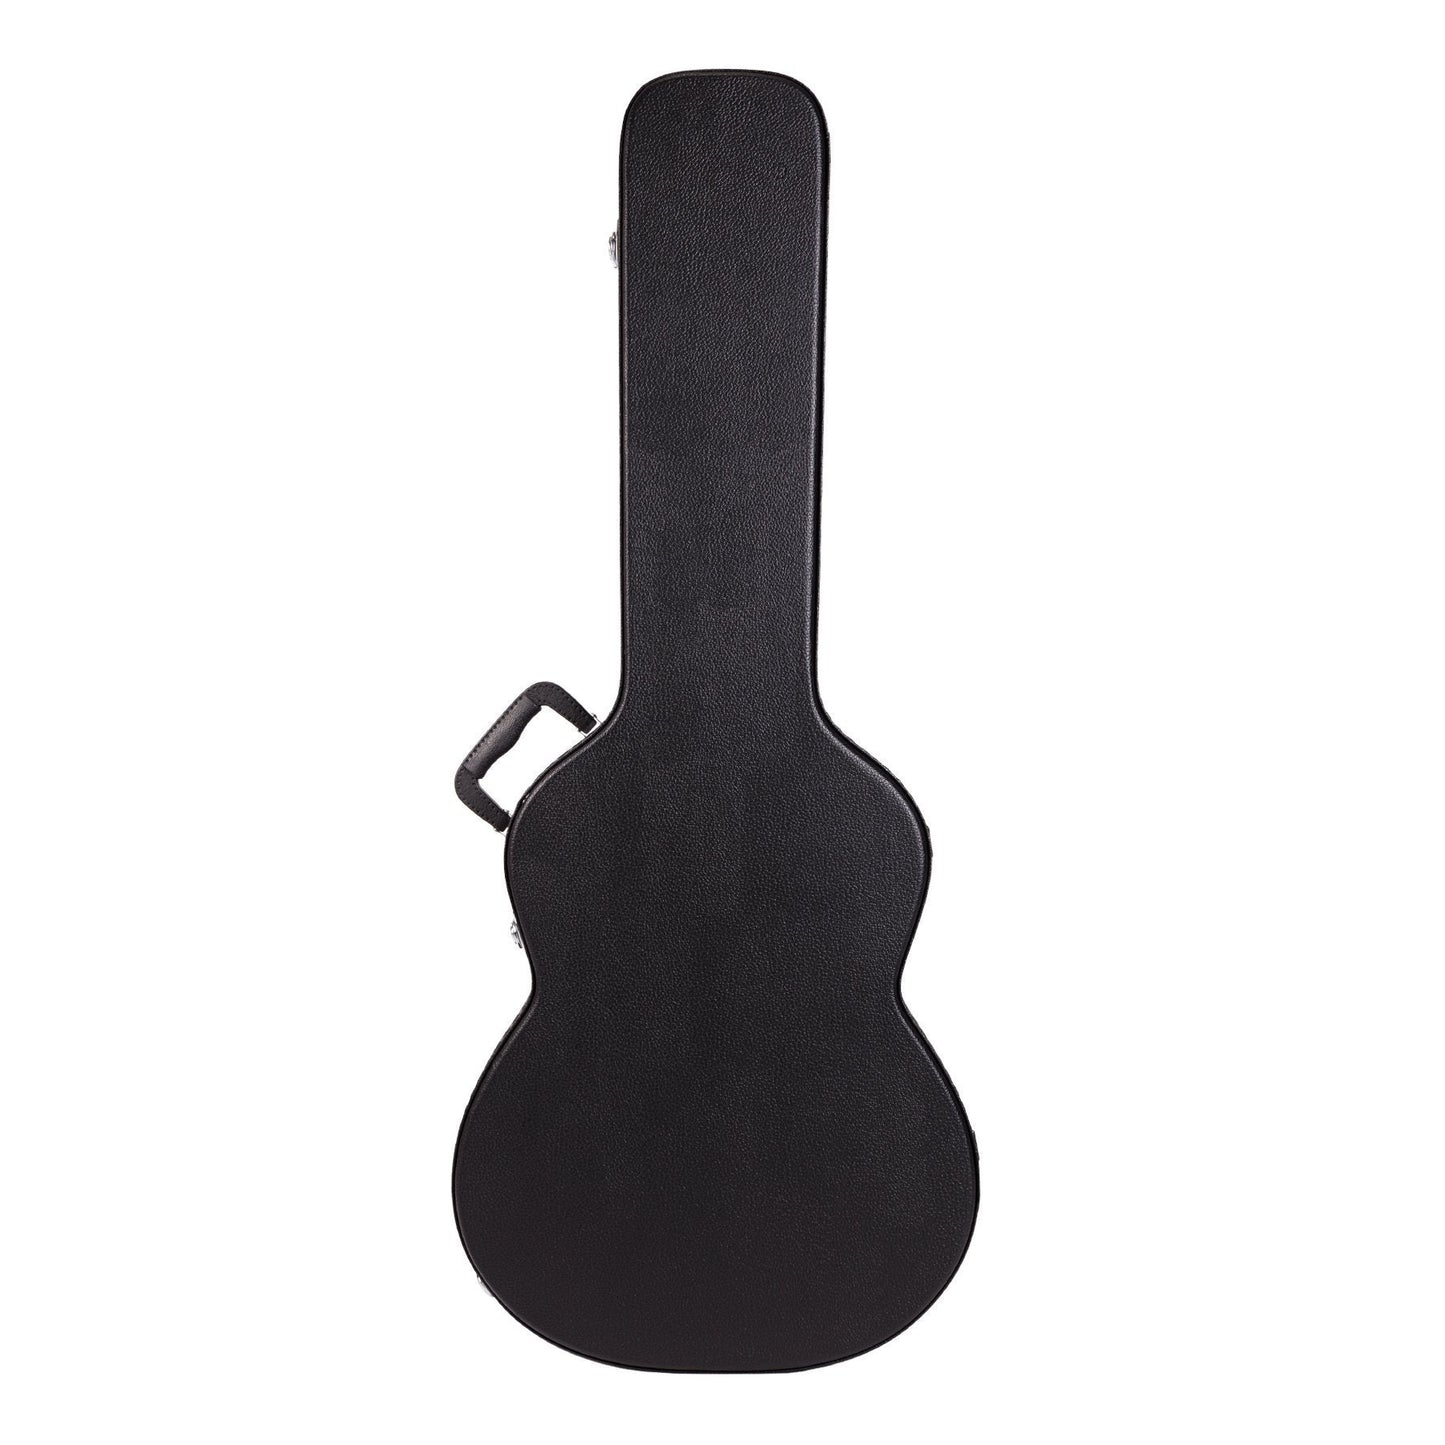 Crossfire Standard Shaped Classical Guitar Hard Case (Black)